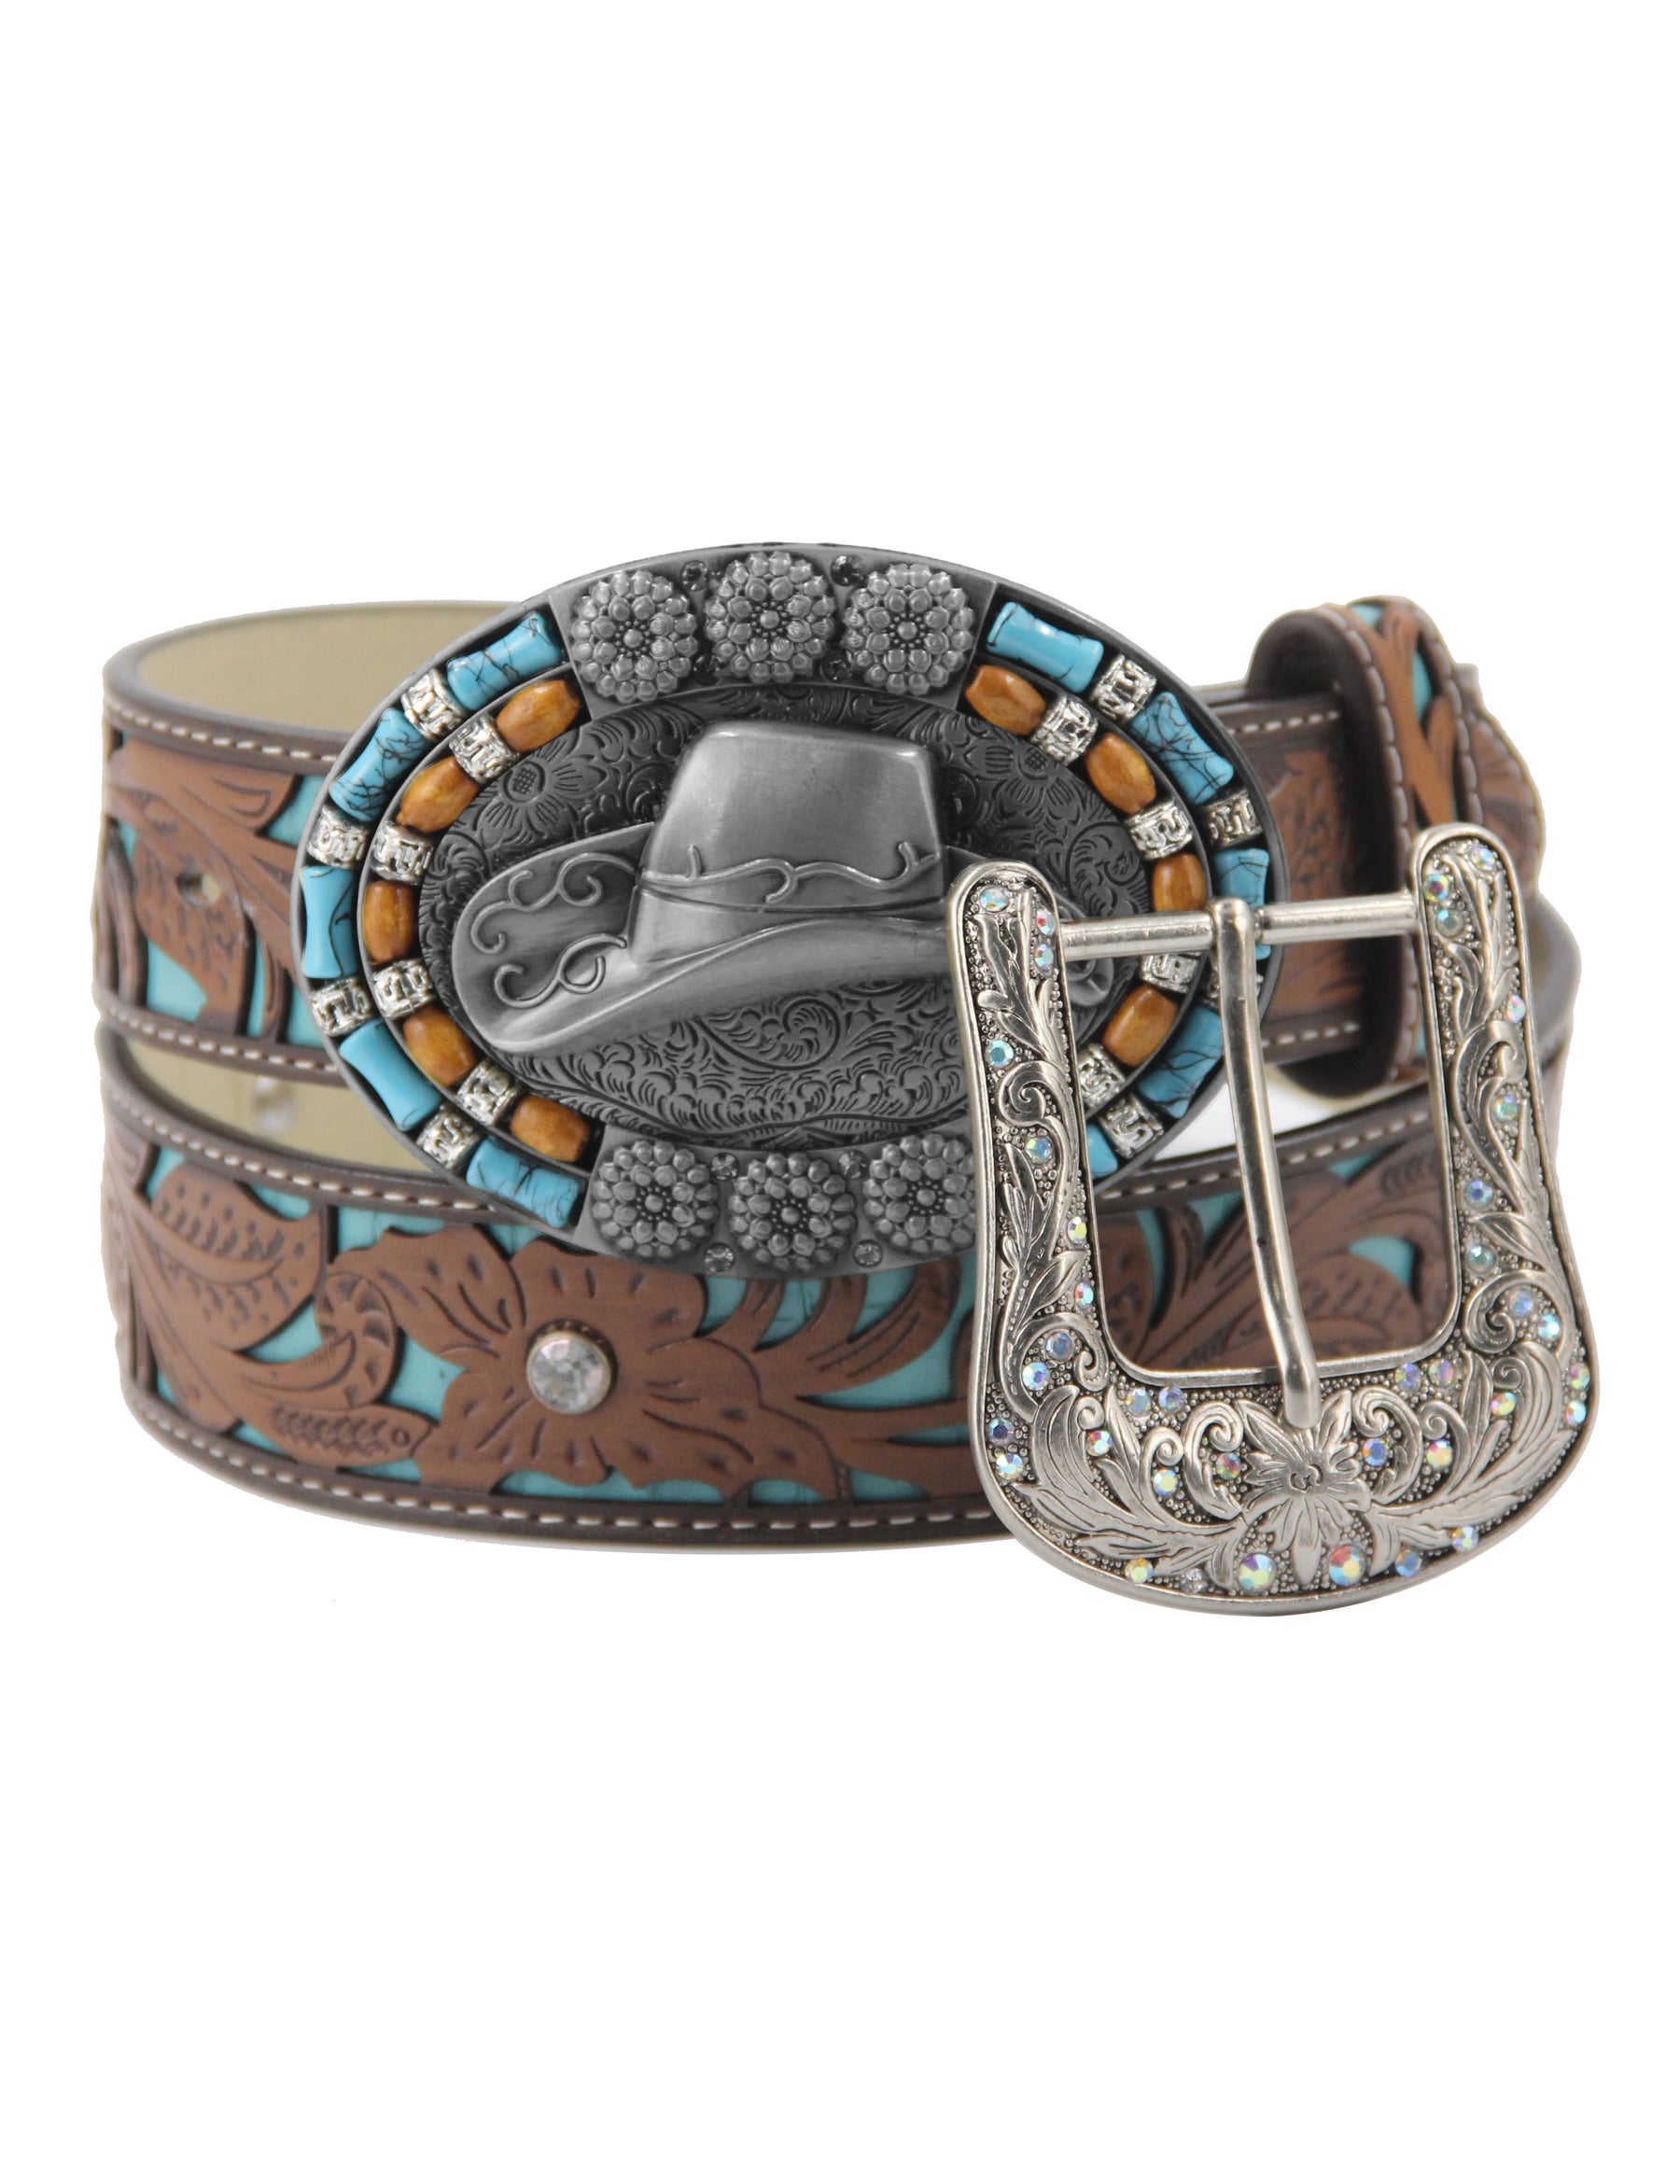 TOPACC Western Turquoise Belts - Cowboy Hat Belt Buckle Copper/Bronze